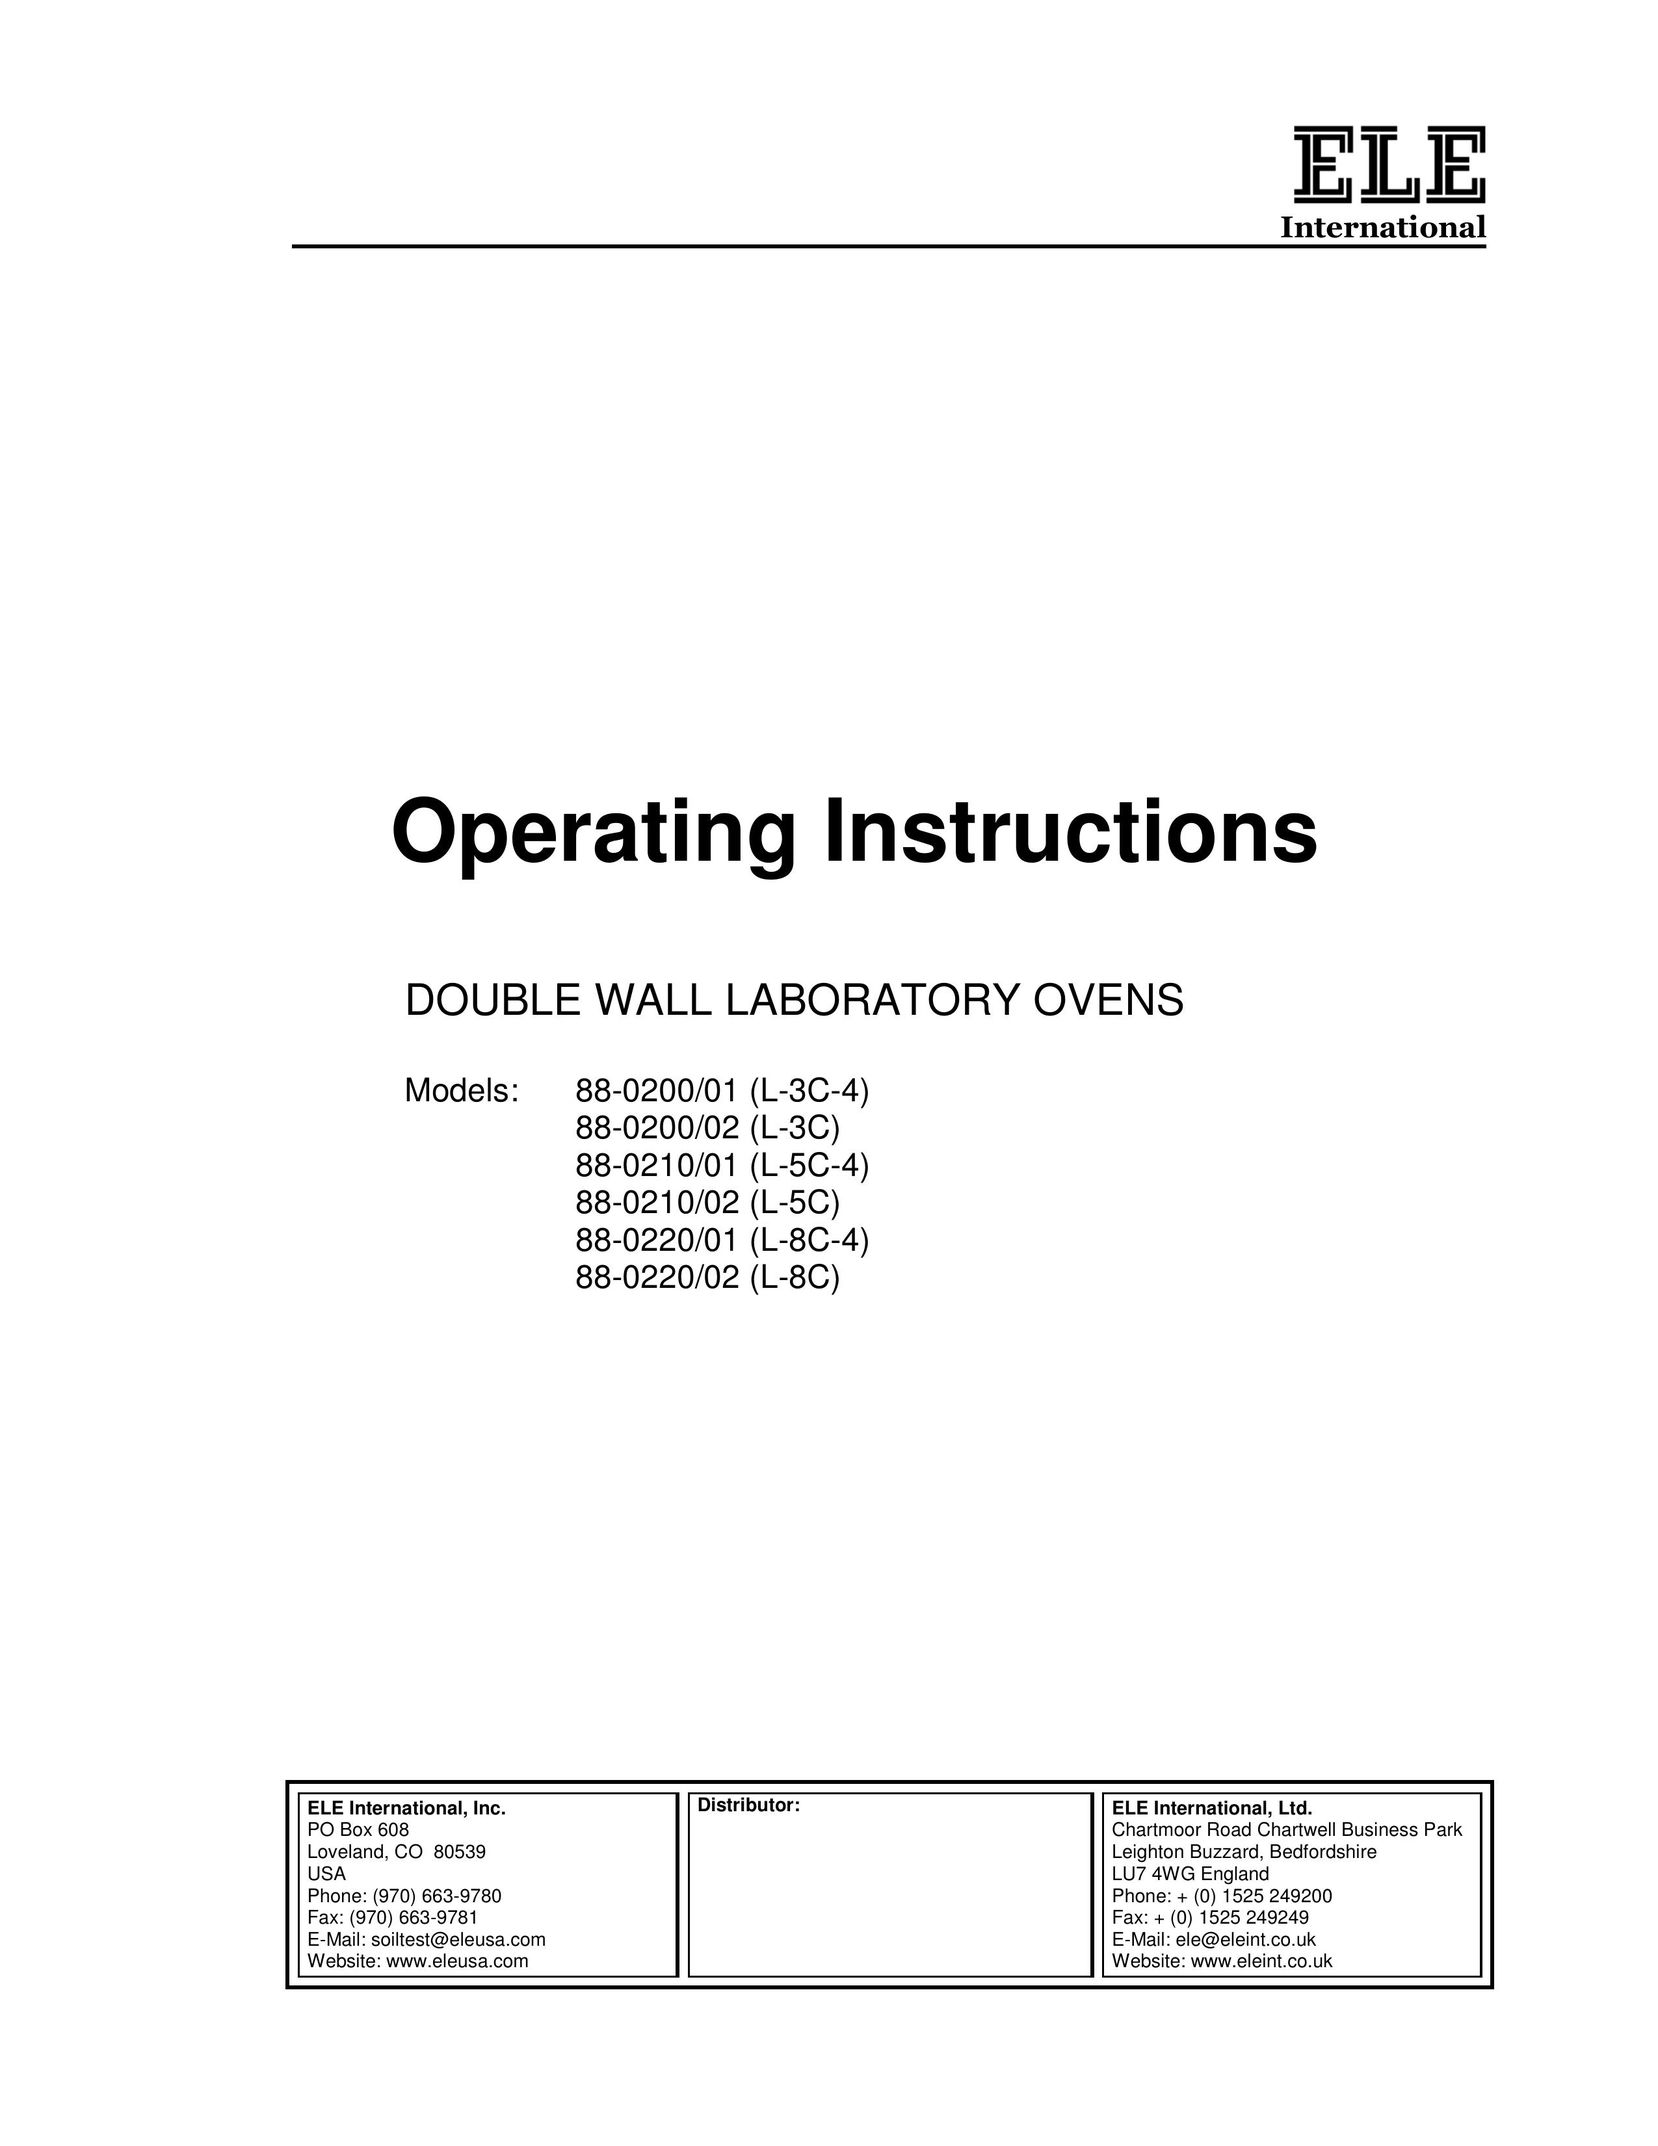 Ele 88-0210/02 (L-5C) Double Oven User Manual